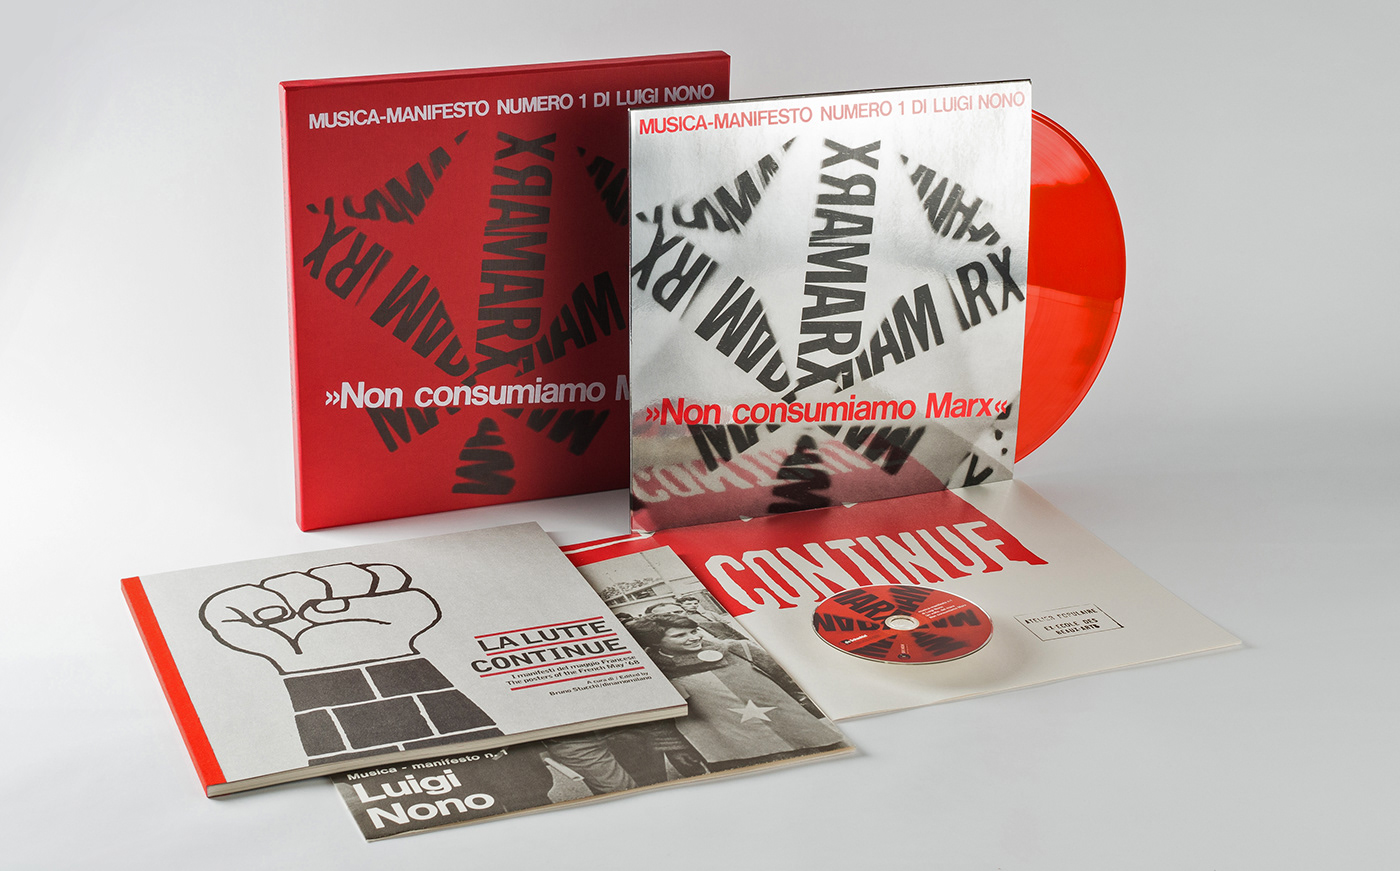 Die Schachtel vinyl vinyl records Packaging Records experimental music electronic misic fine art Biennale